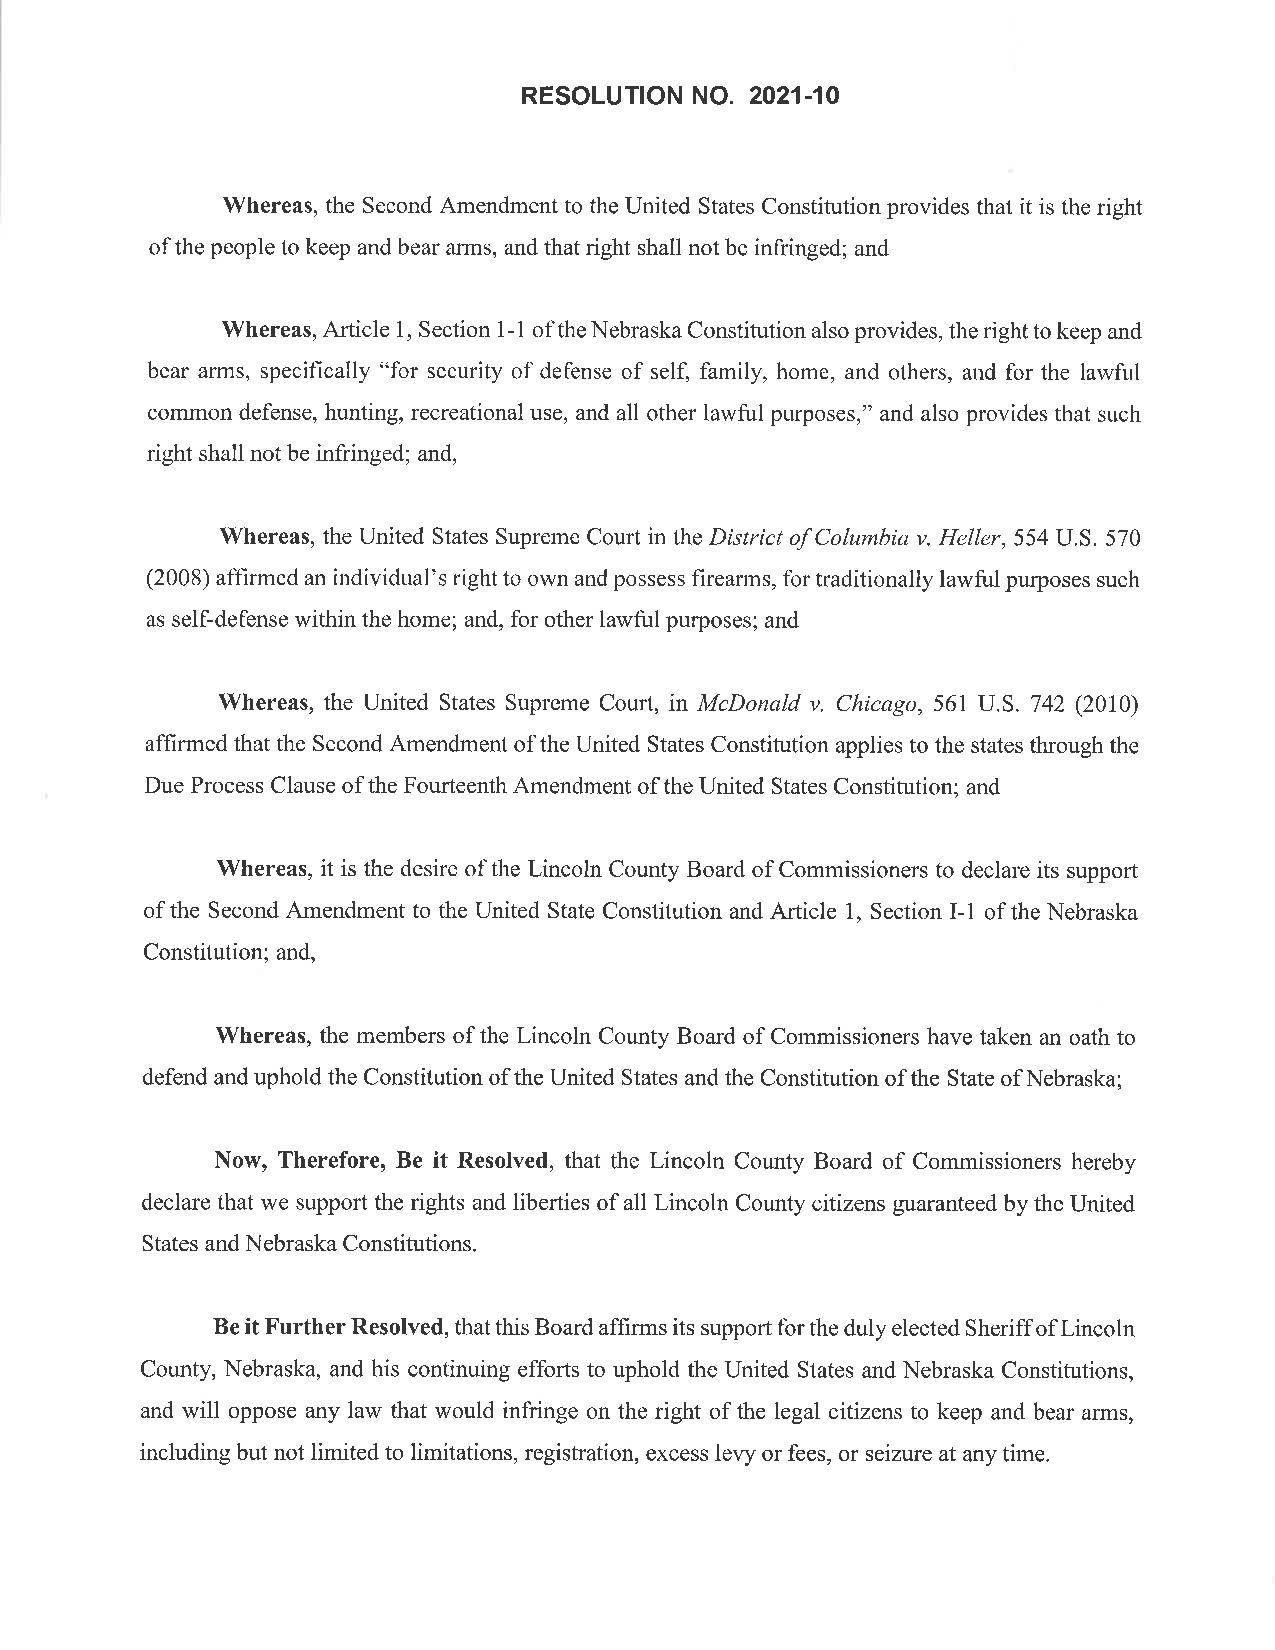 Lincoln County Nebraska Resolution Page 1